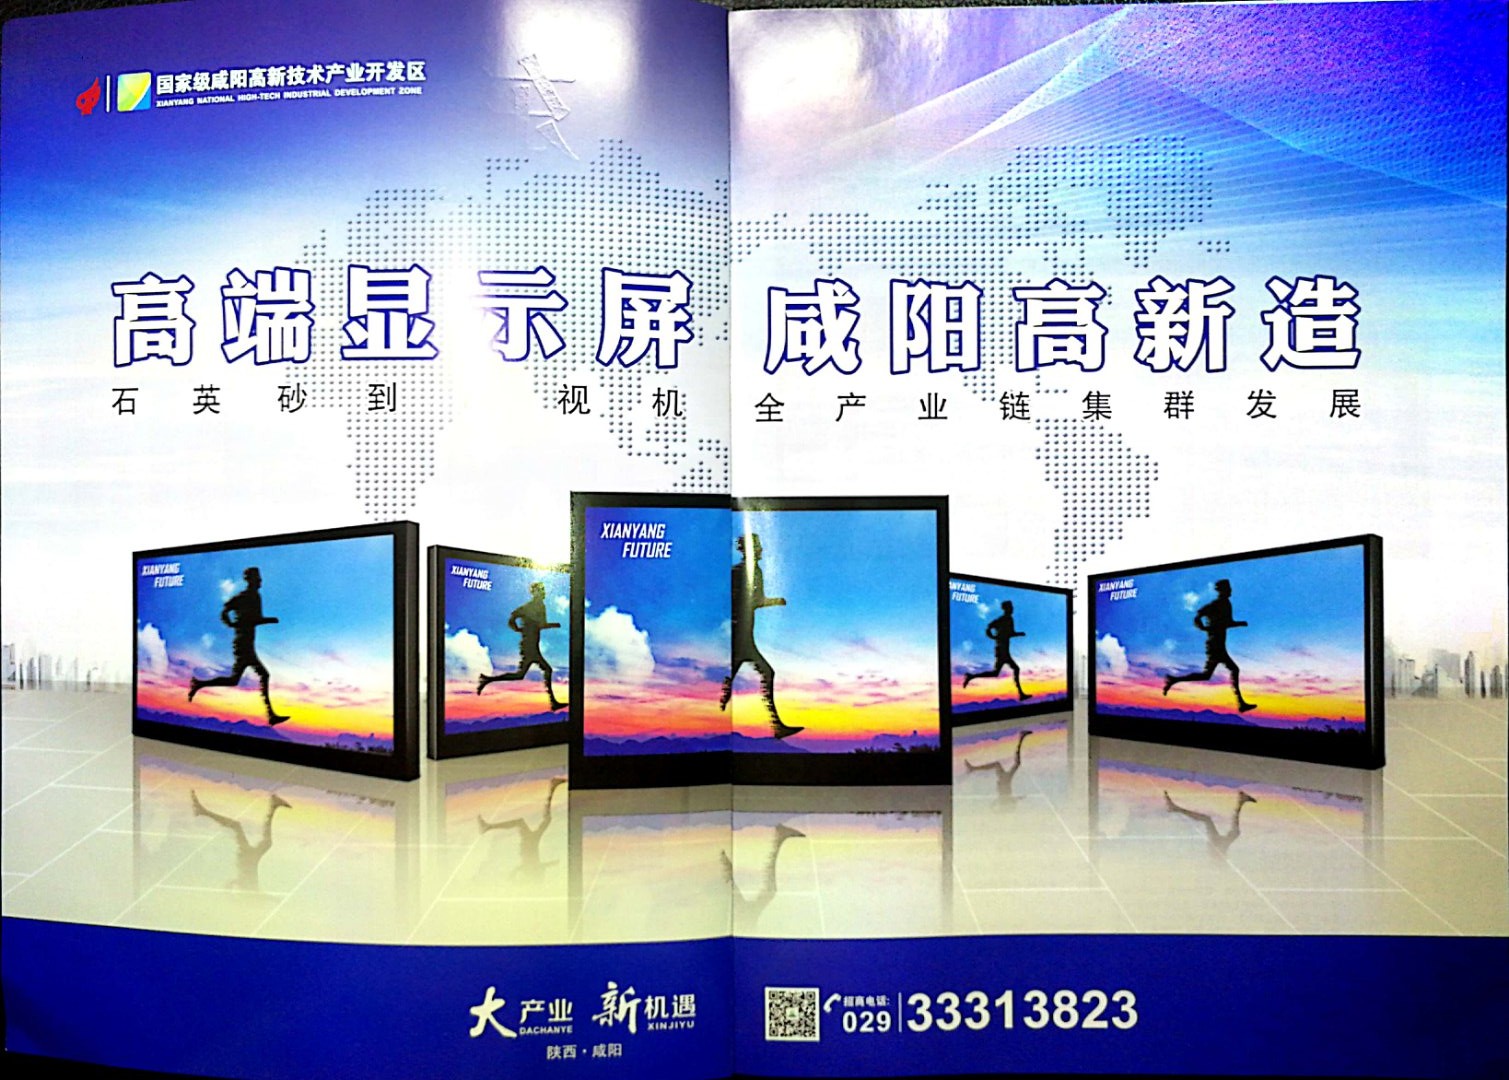 China Eastern magazine ad